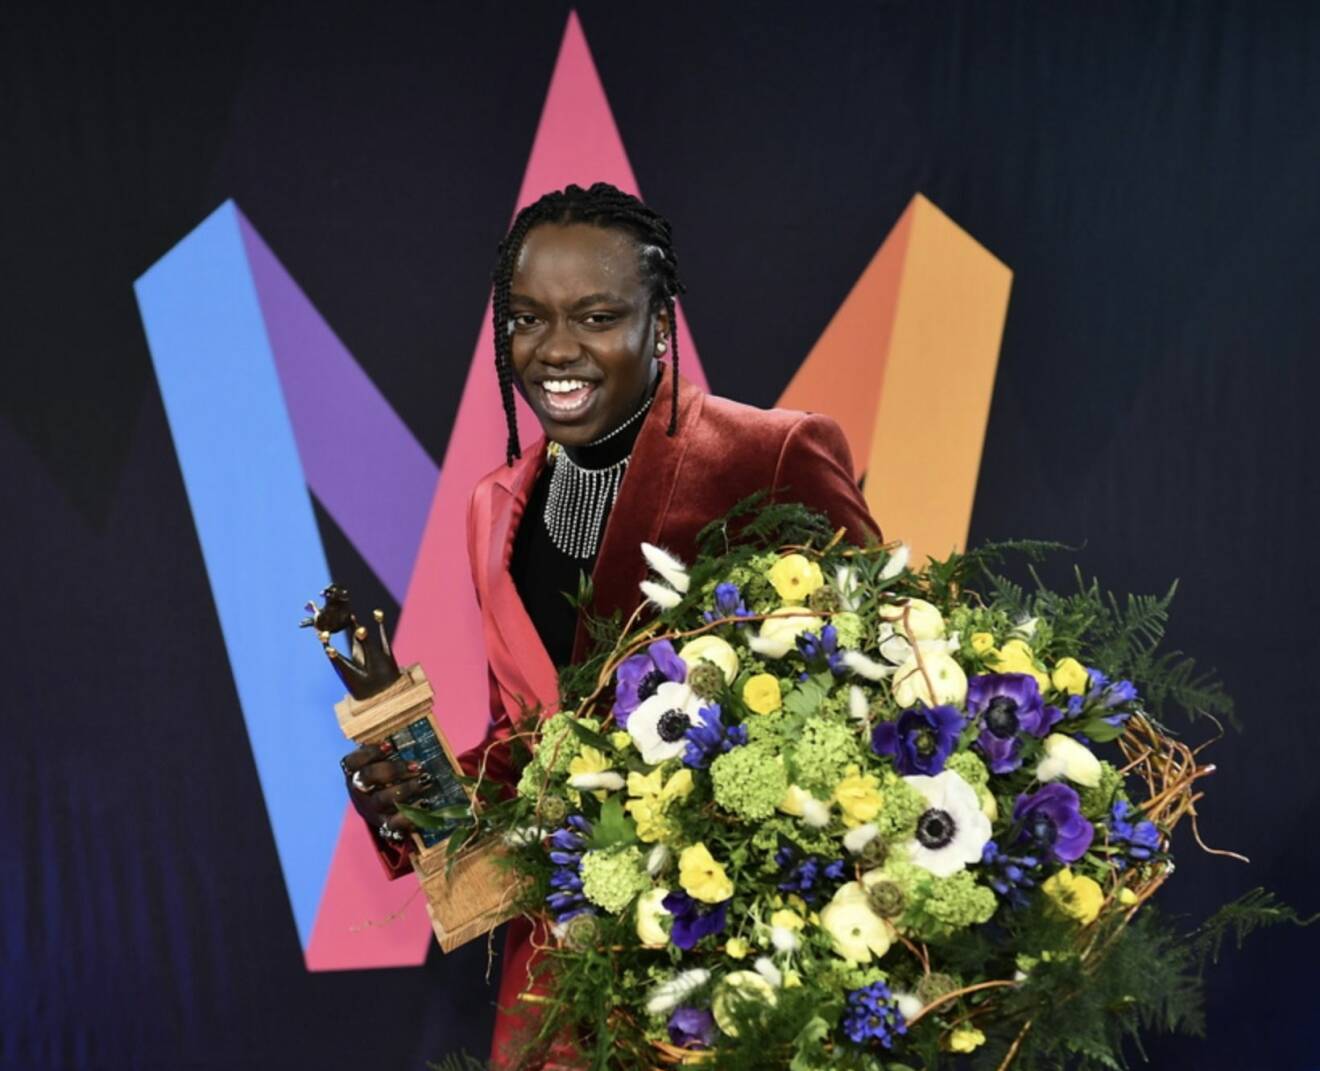 Tusse vann Melodifestivalen 2021